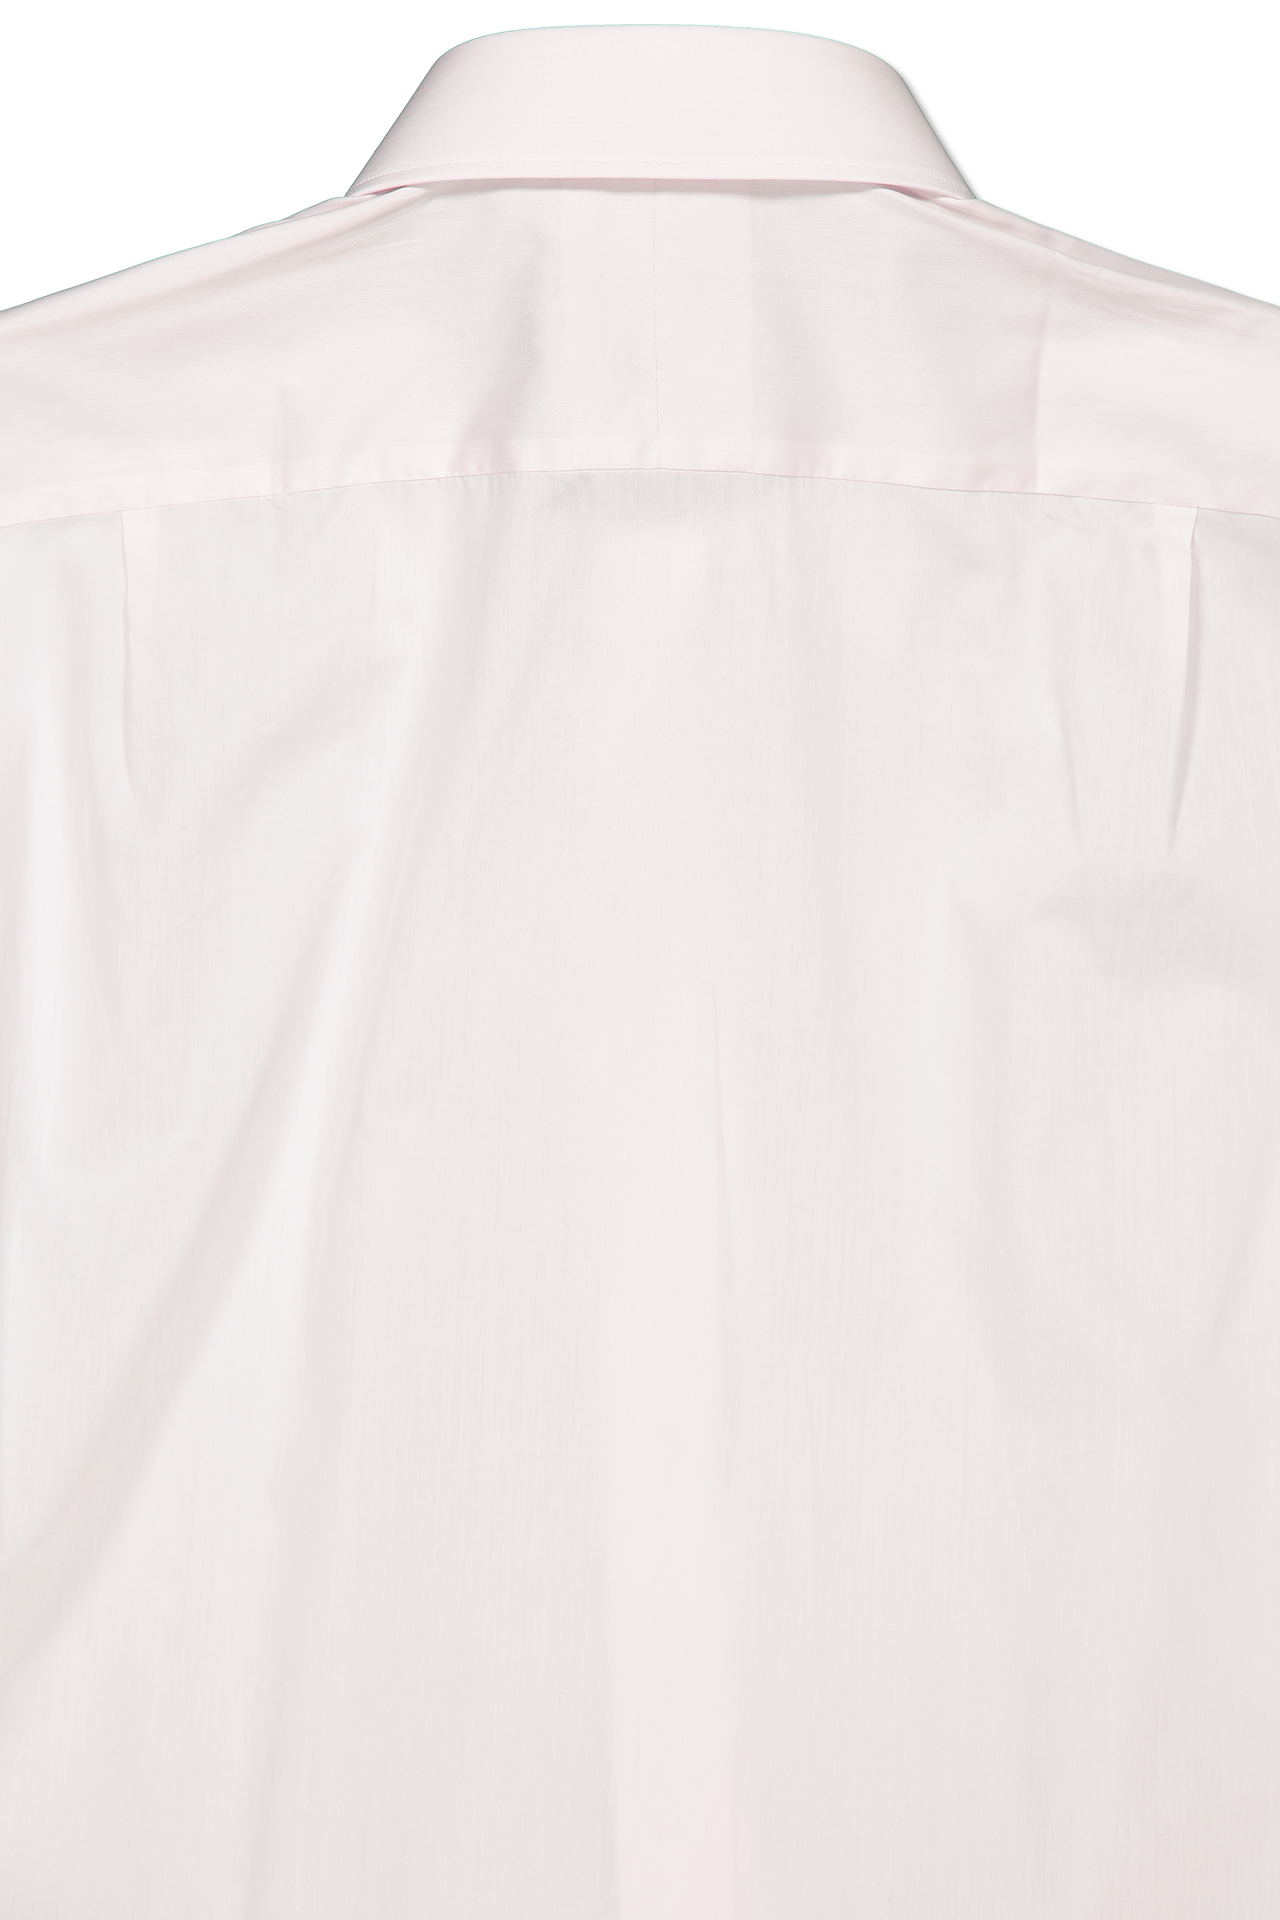 Fili Pink Dress Shirt (4461221052531)